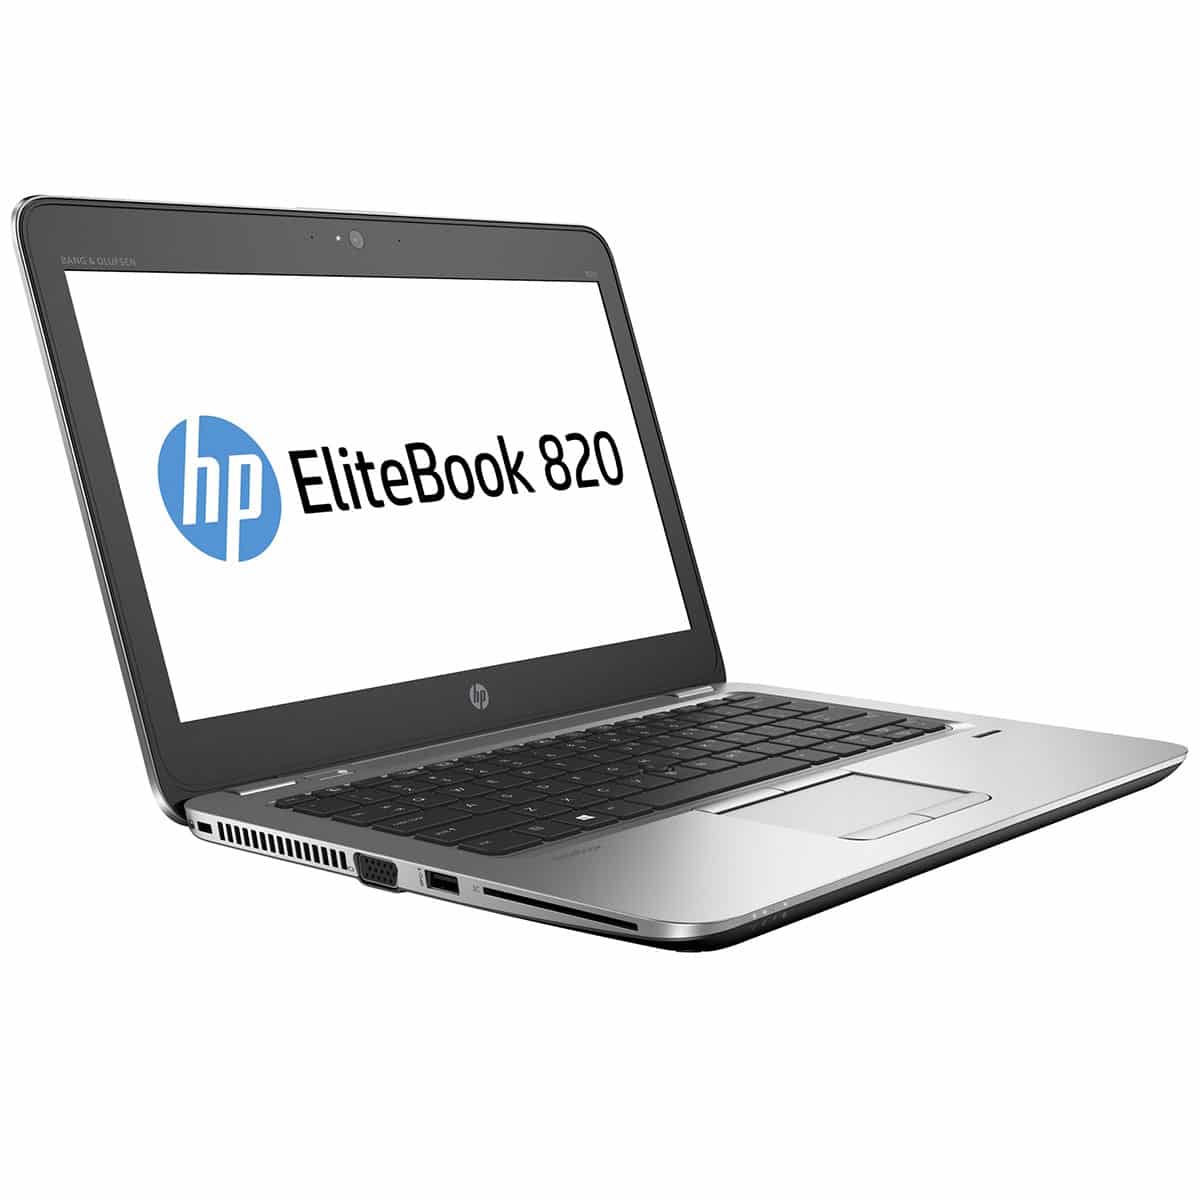 HP EliteBook 820 G4 Notebook PC Intel Core i5 7th Gen 8GB RAM ...